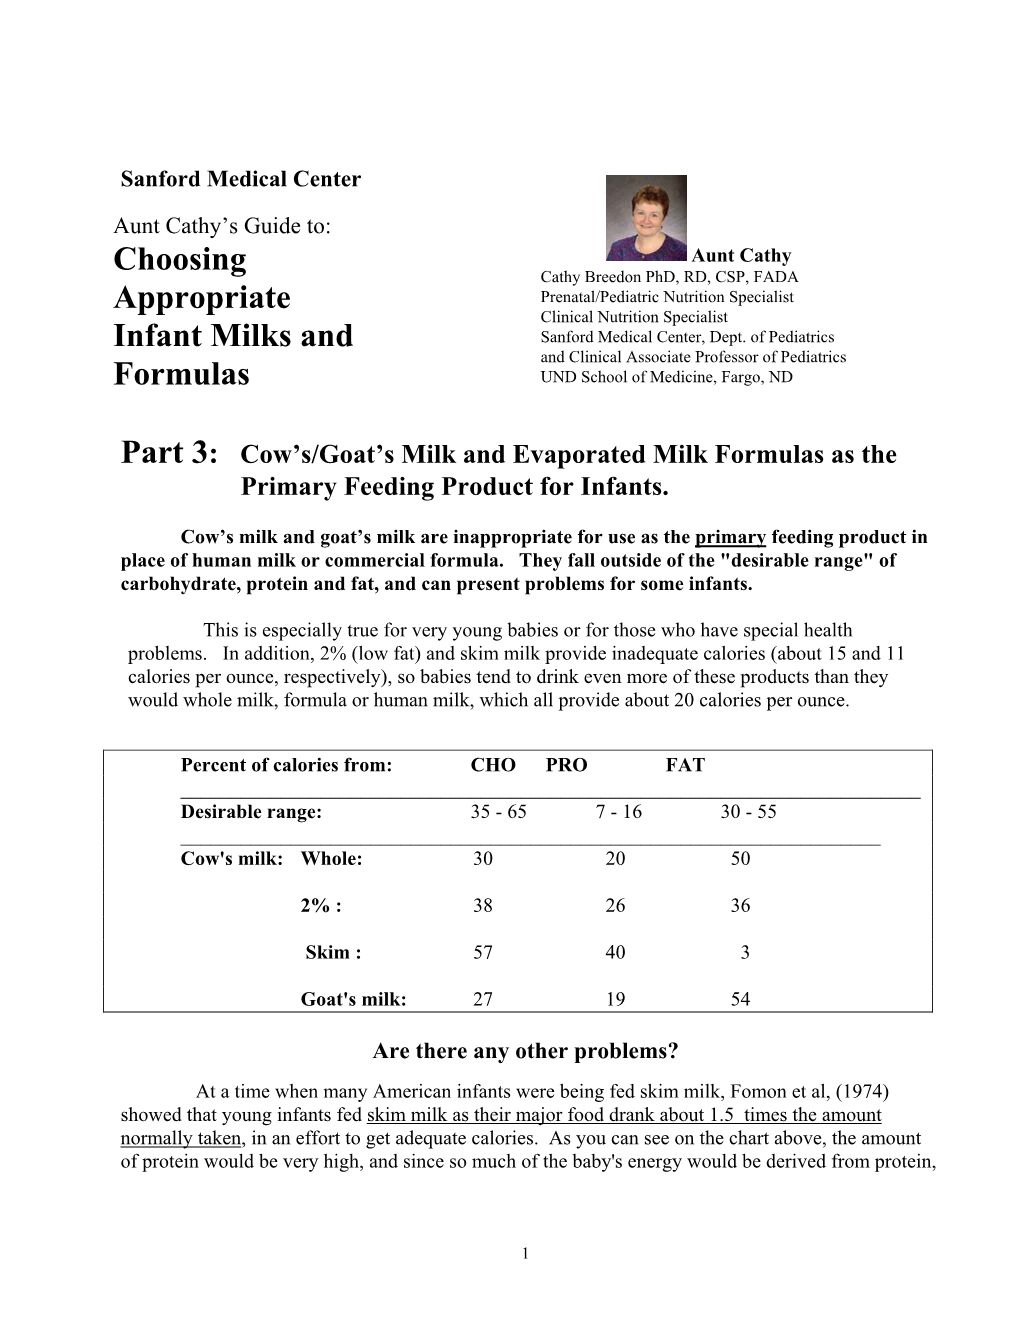 Choosing Appropriate Infant Milks and Formulas